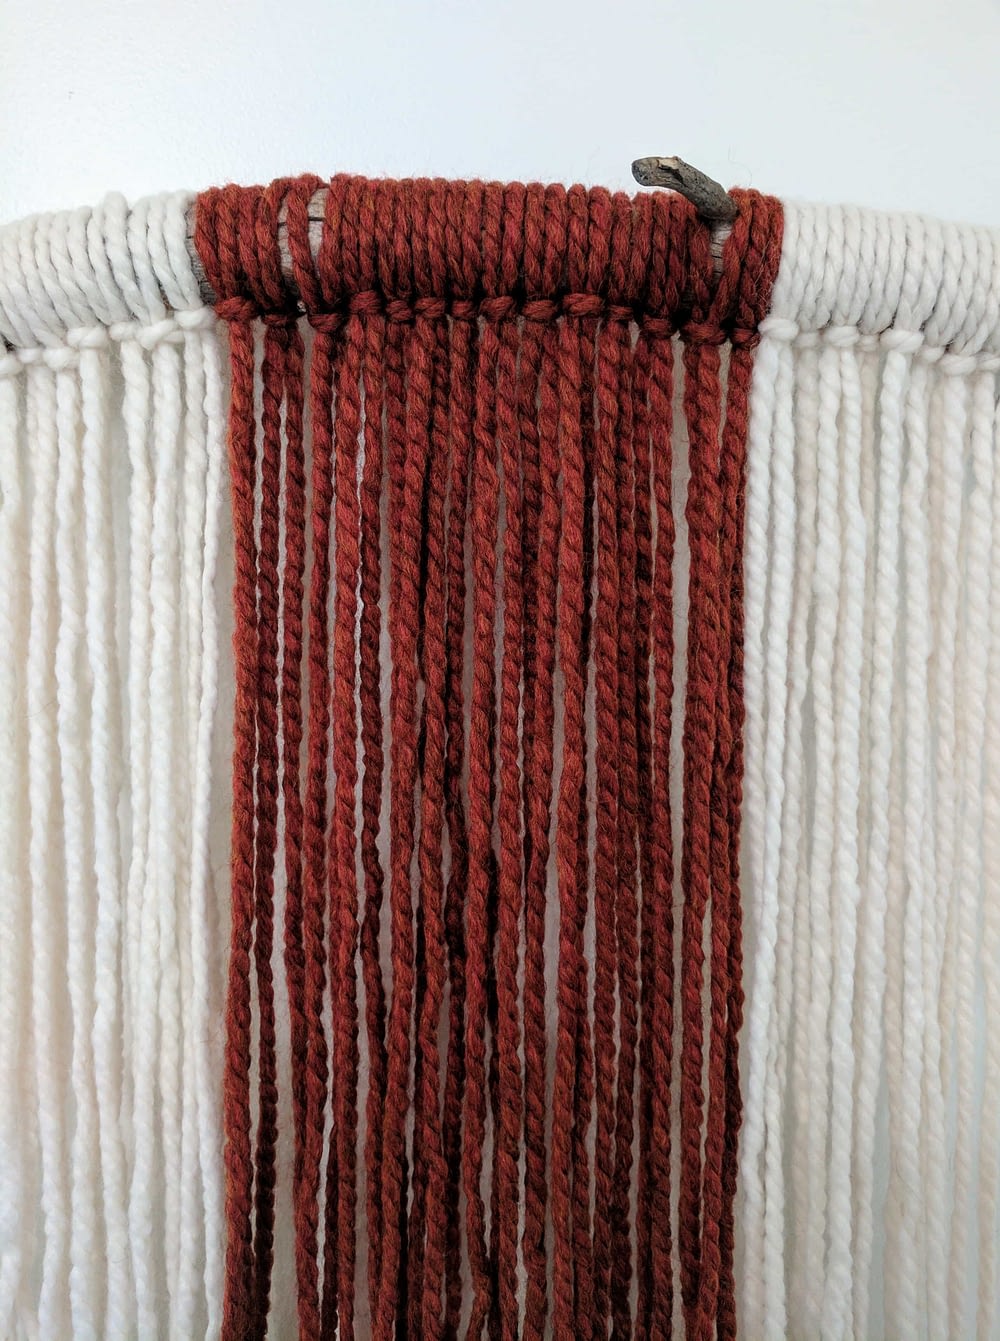 close-up of the DIY wall hanging yarn